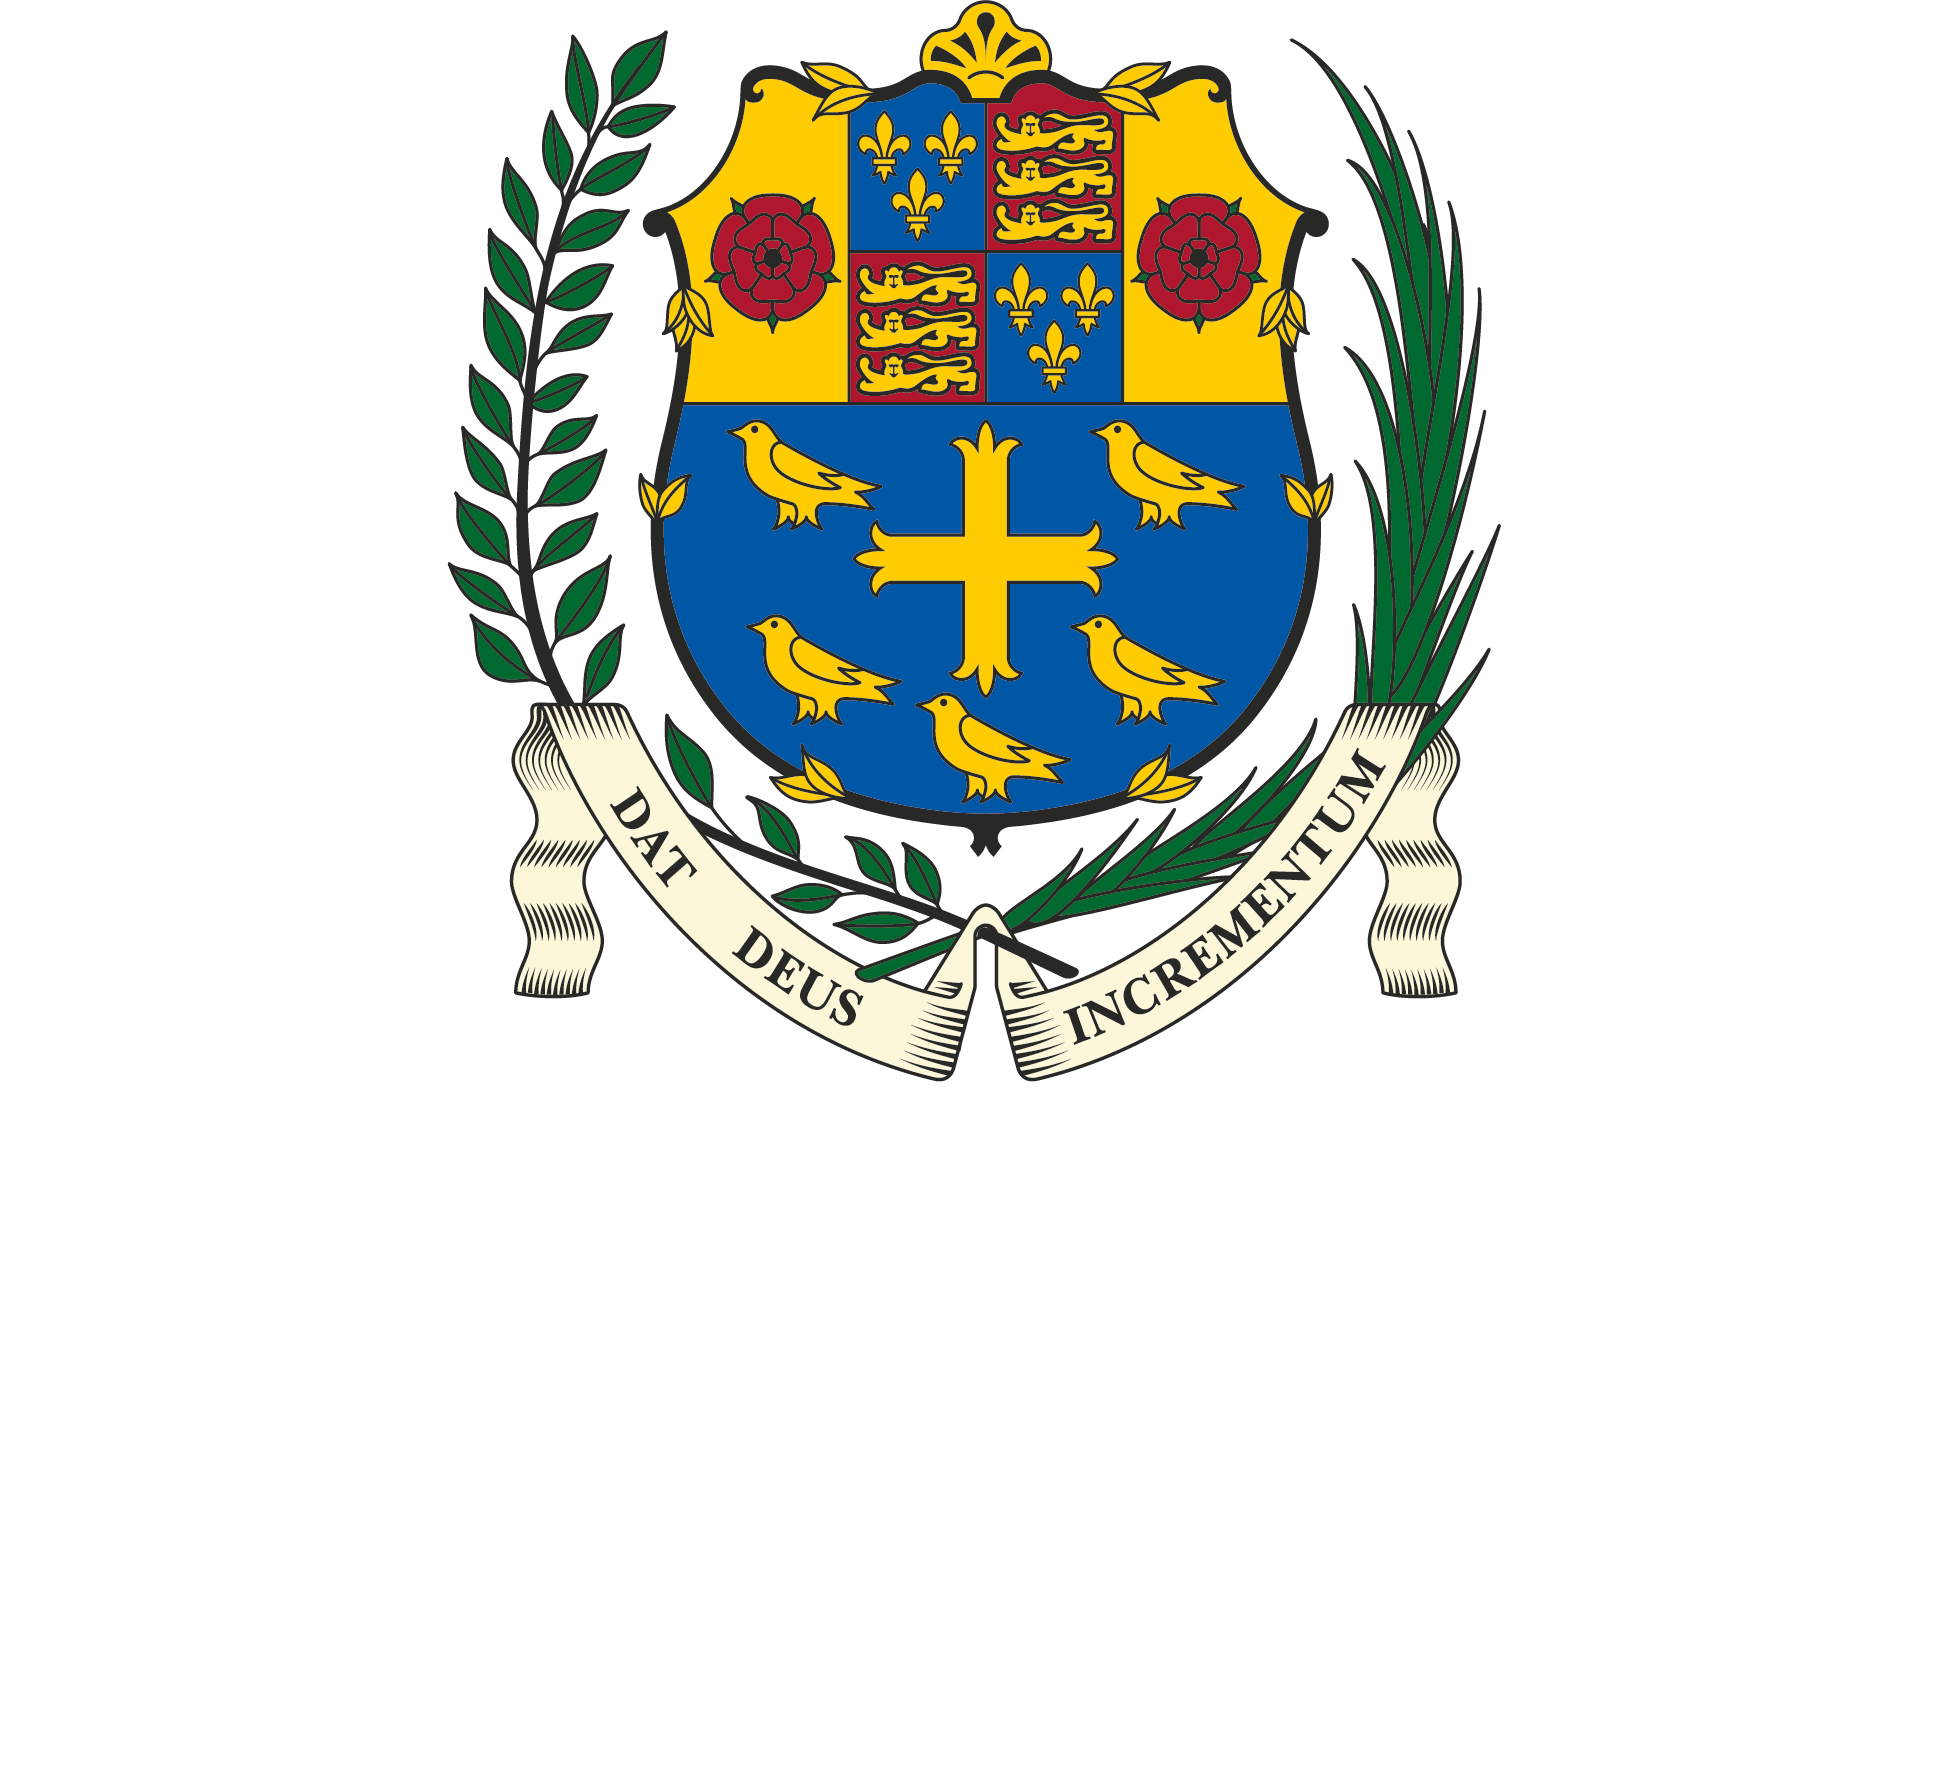 westminster high school tour